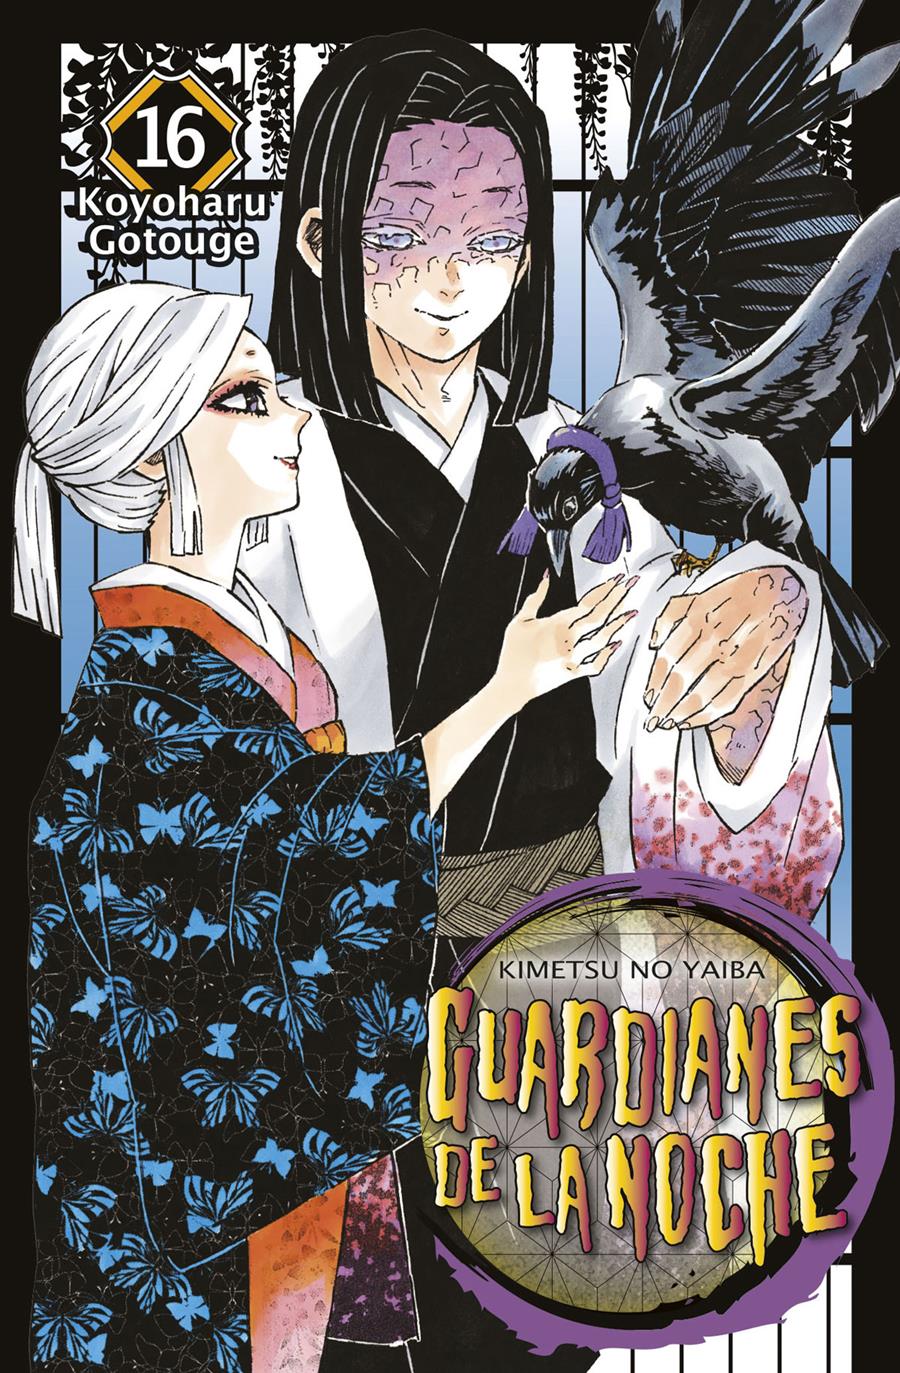 Guardianes de la noche 16 | N1220-NOR27 | Koyoharu Gotouge | Terra de Còmic - Tu tienda de cómics online especializada en cómics, manga y merchandising